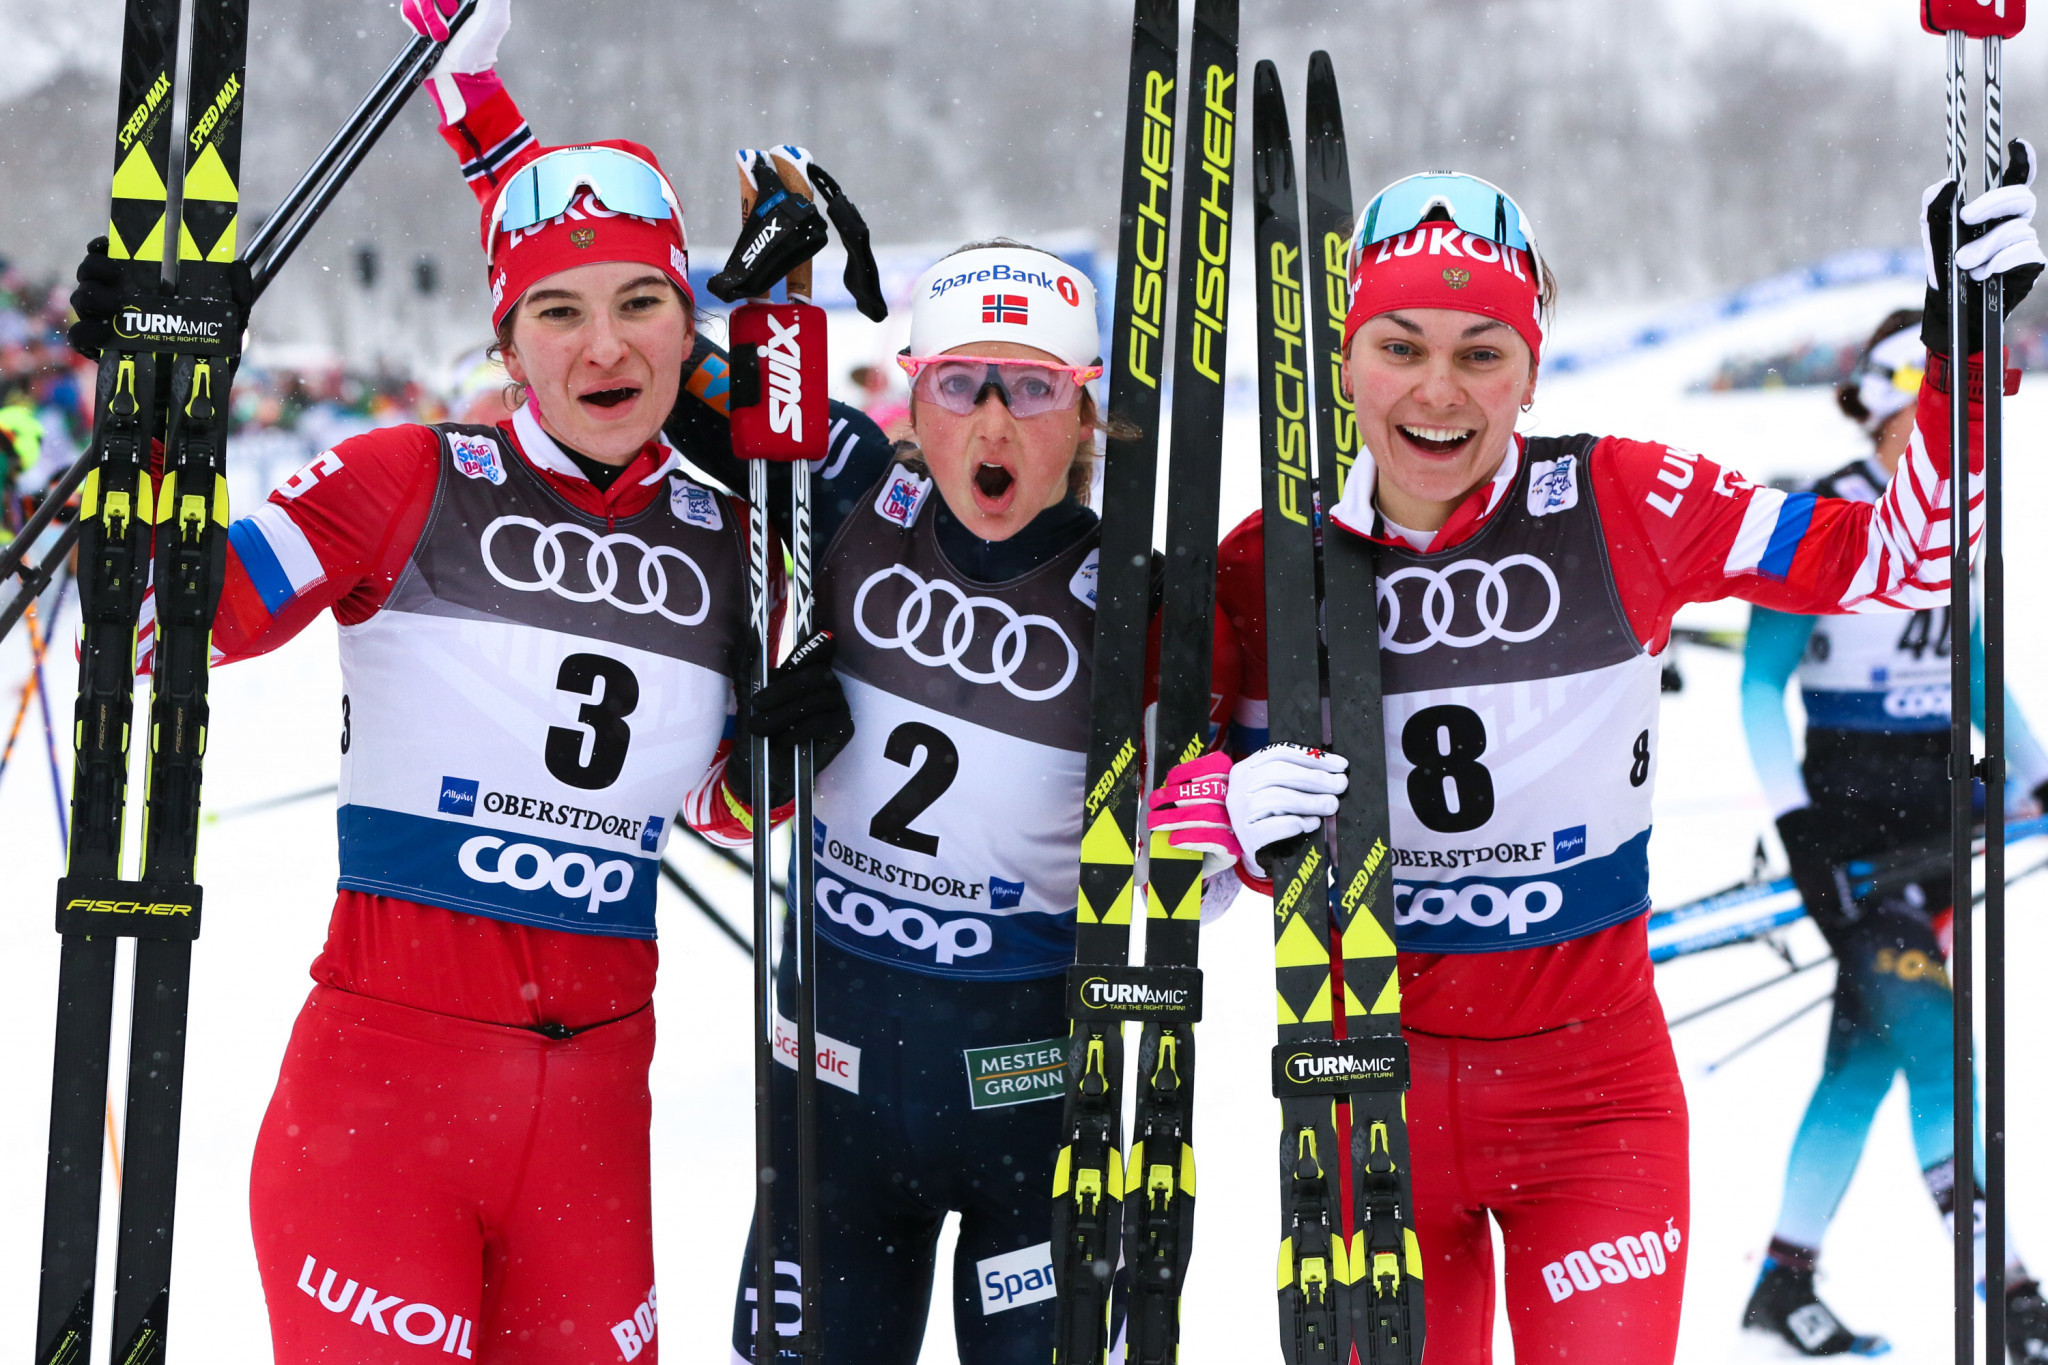 Østberg wins women's Oberstdorf mass start to take overall Tour de Ski lead as Iversen claims men's race